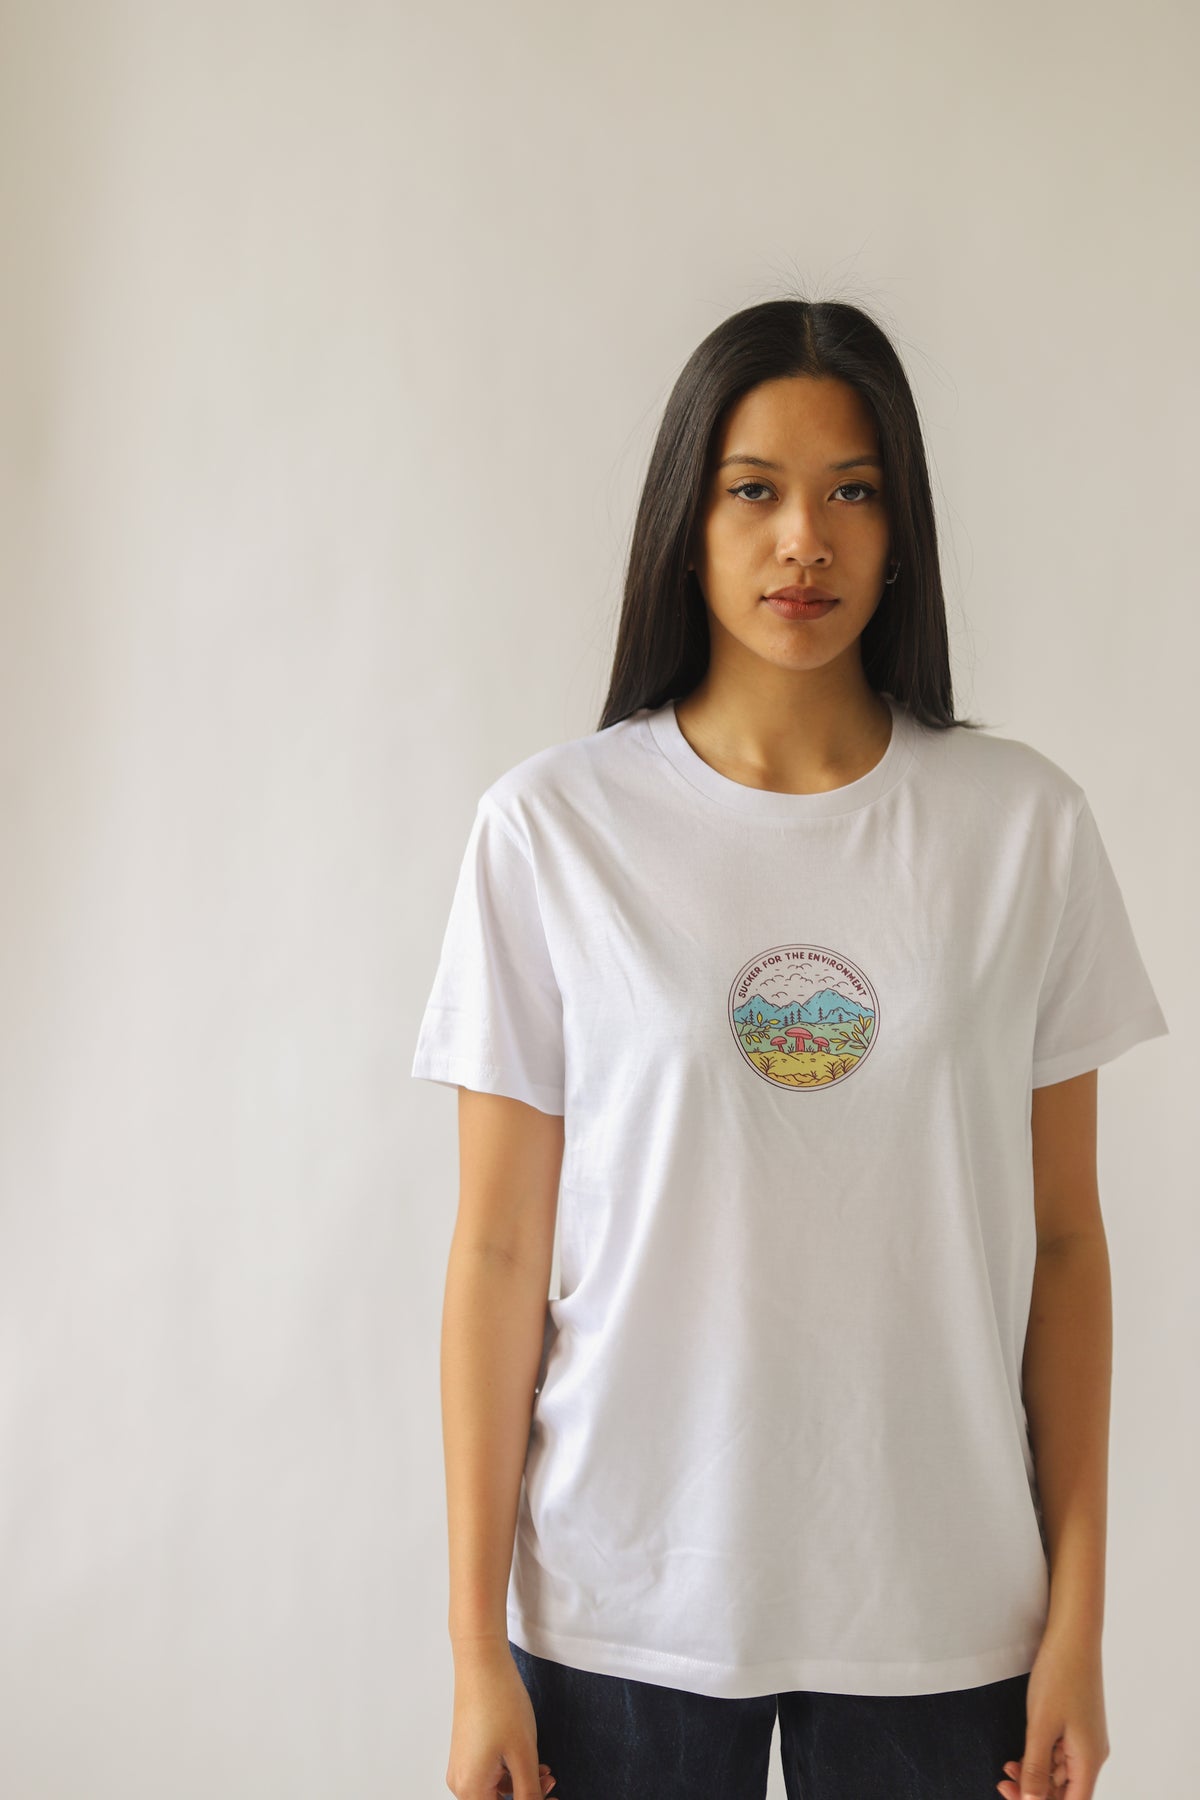 Sucker for the Environment - Unisex Organic Cotton T-Shirt